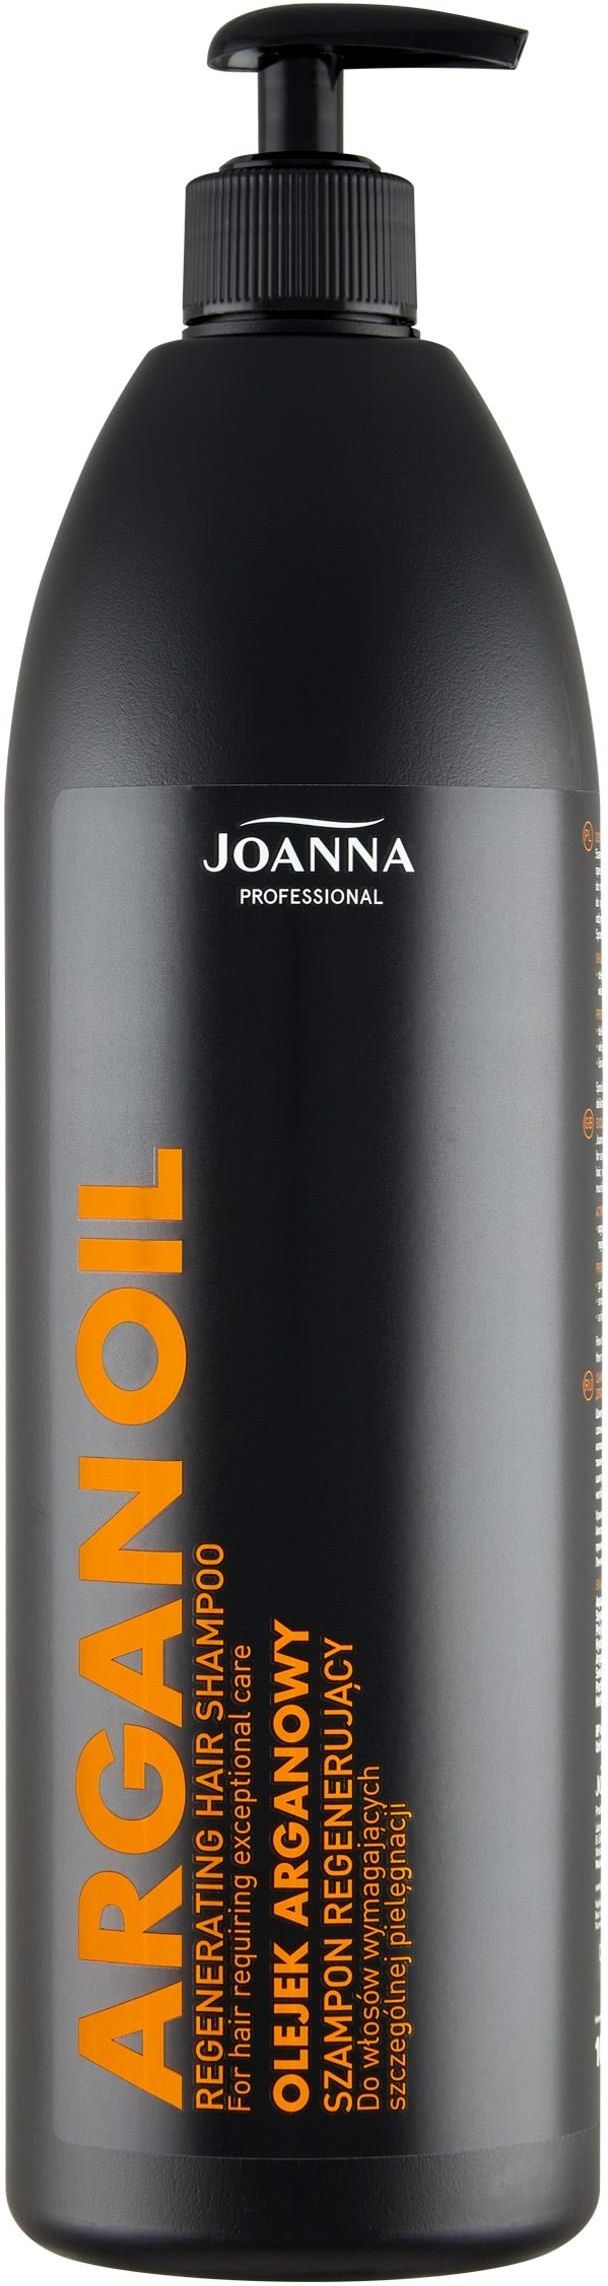 joanna argan oil szampon opinie